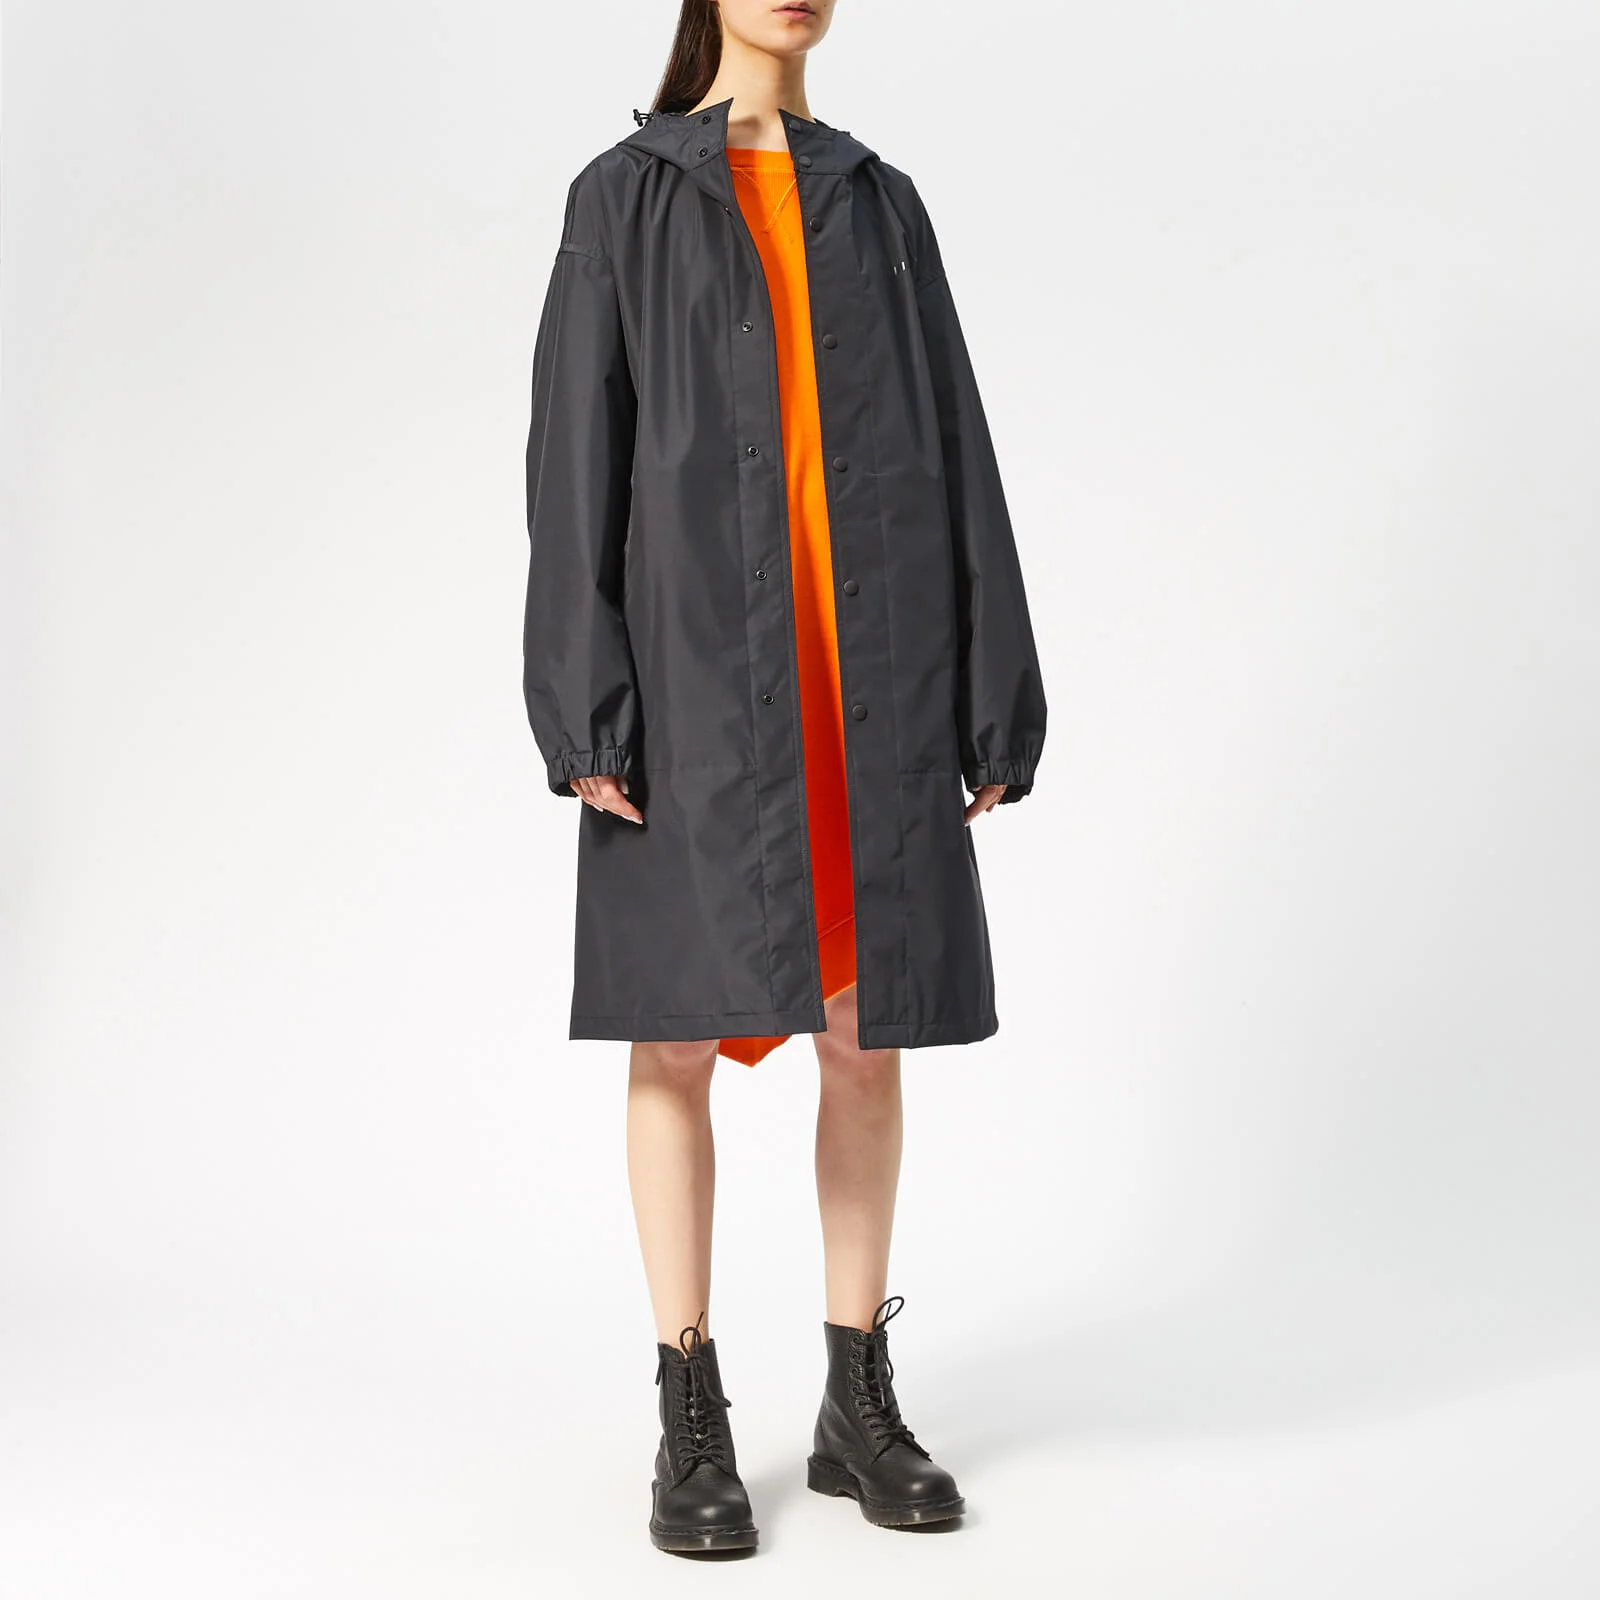 Helmut Lang Women's Hooded Raincoat - Black Image 1